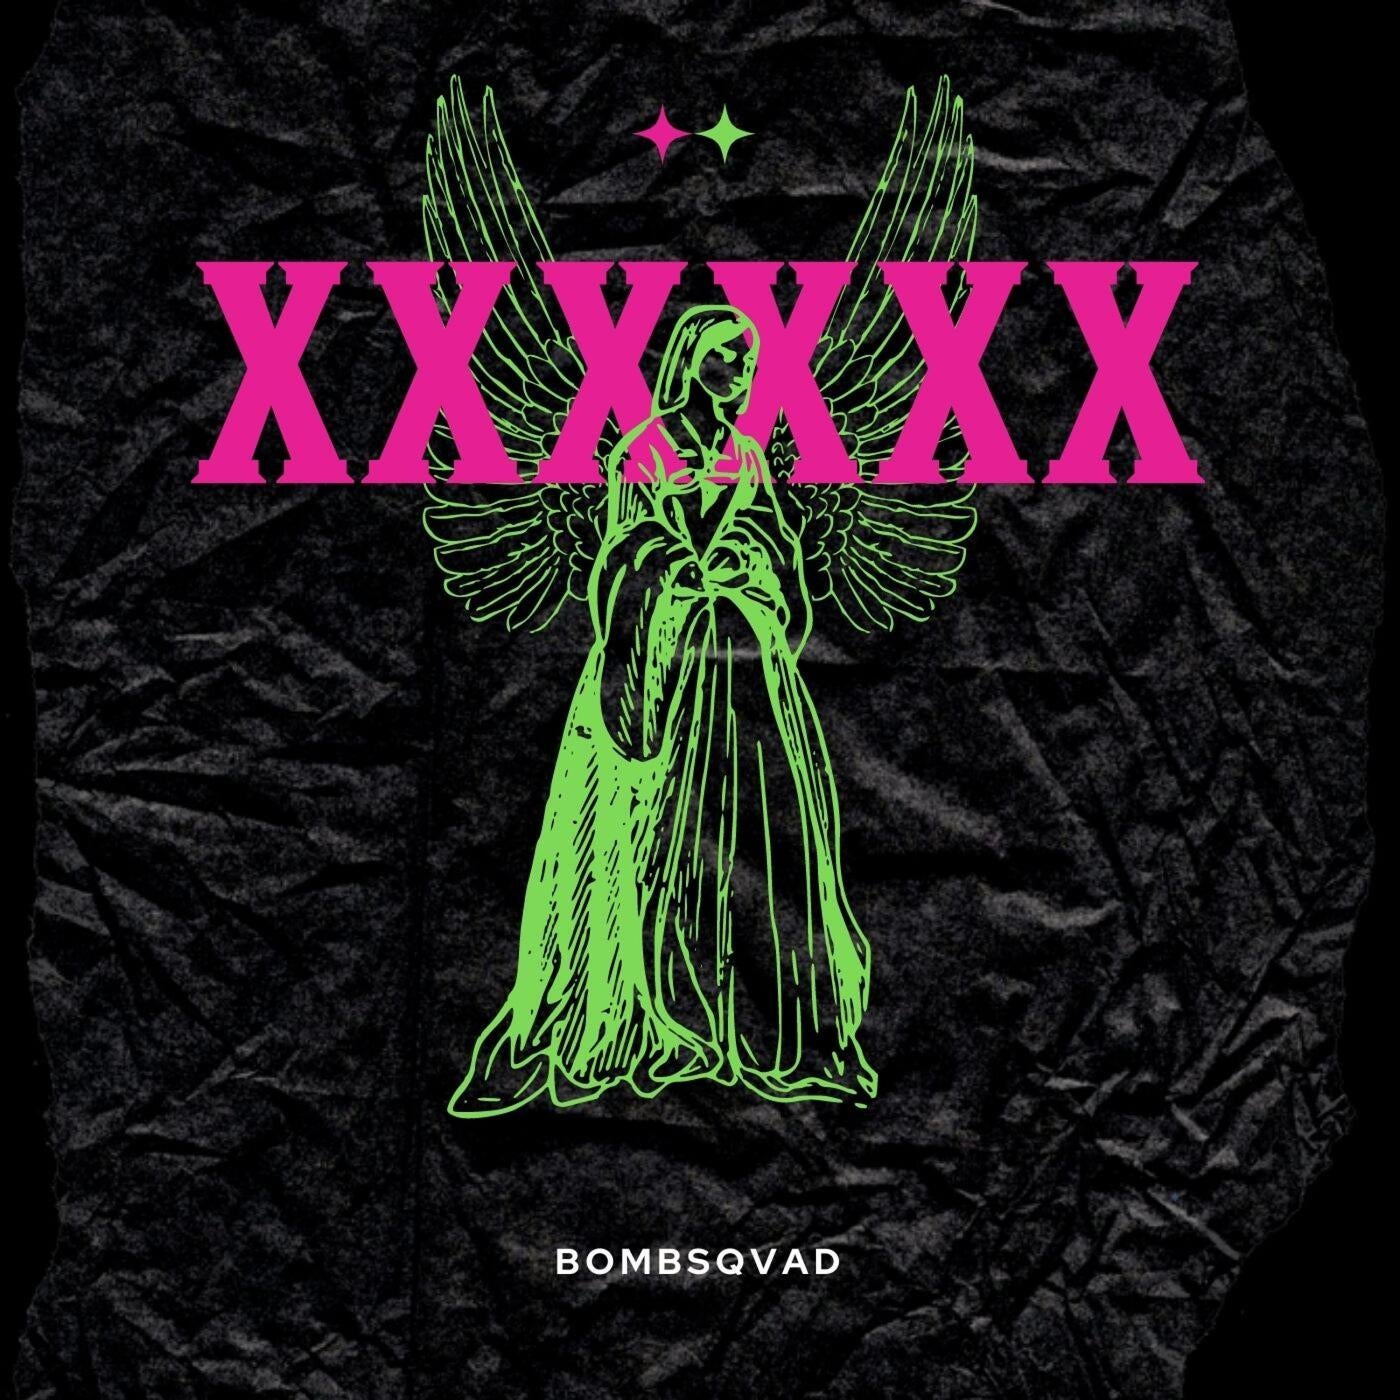 XXXXXX (Original Mix) by Bombsqvad on Beatport